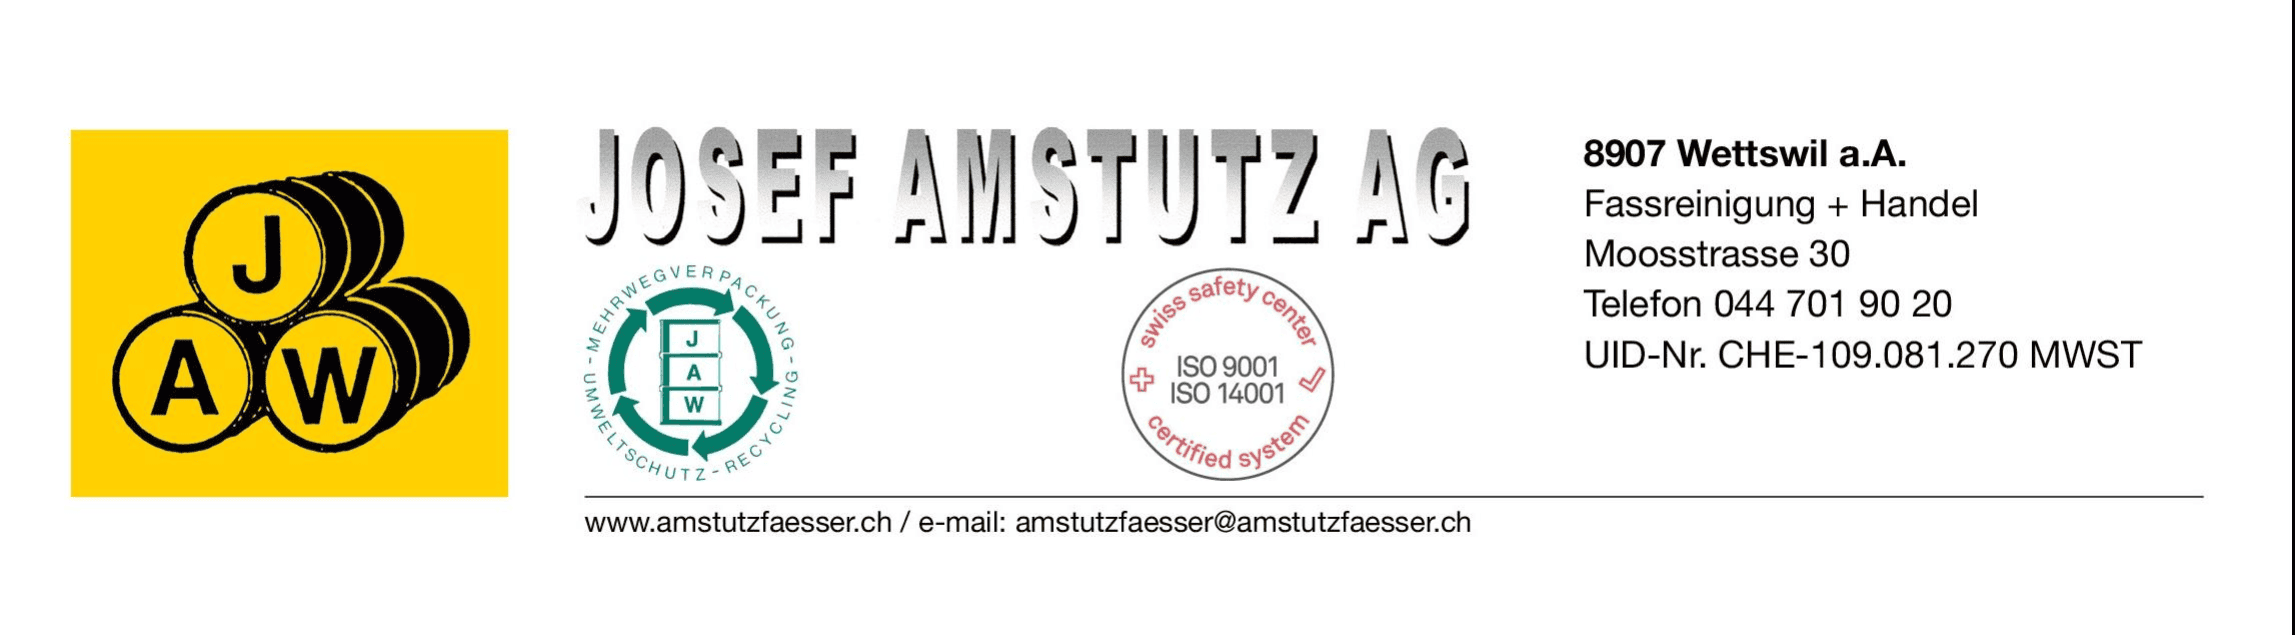 Josef Amstutz AG